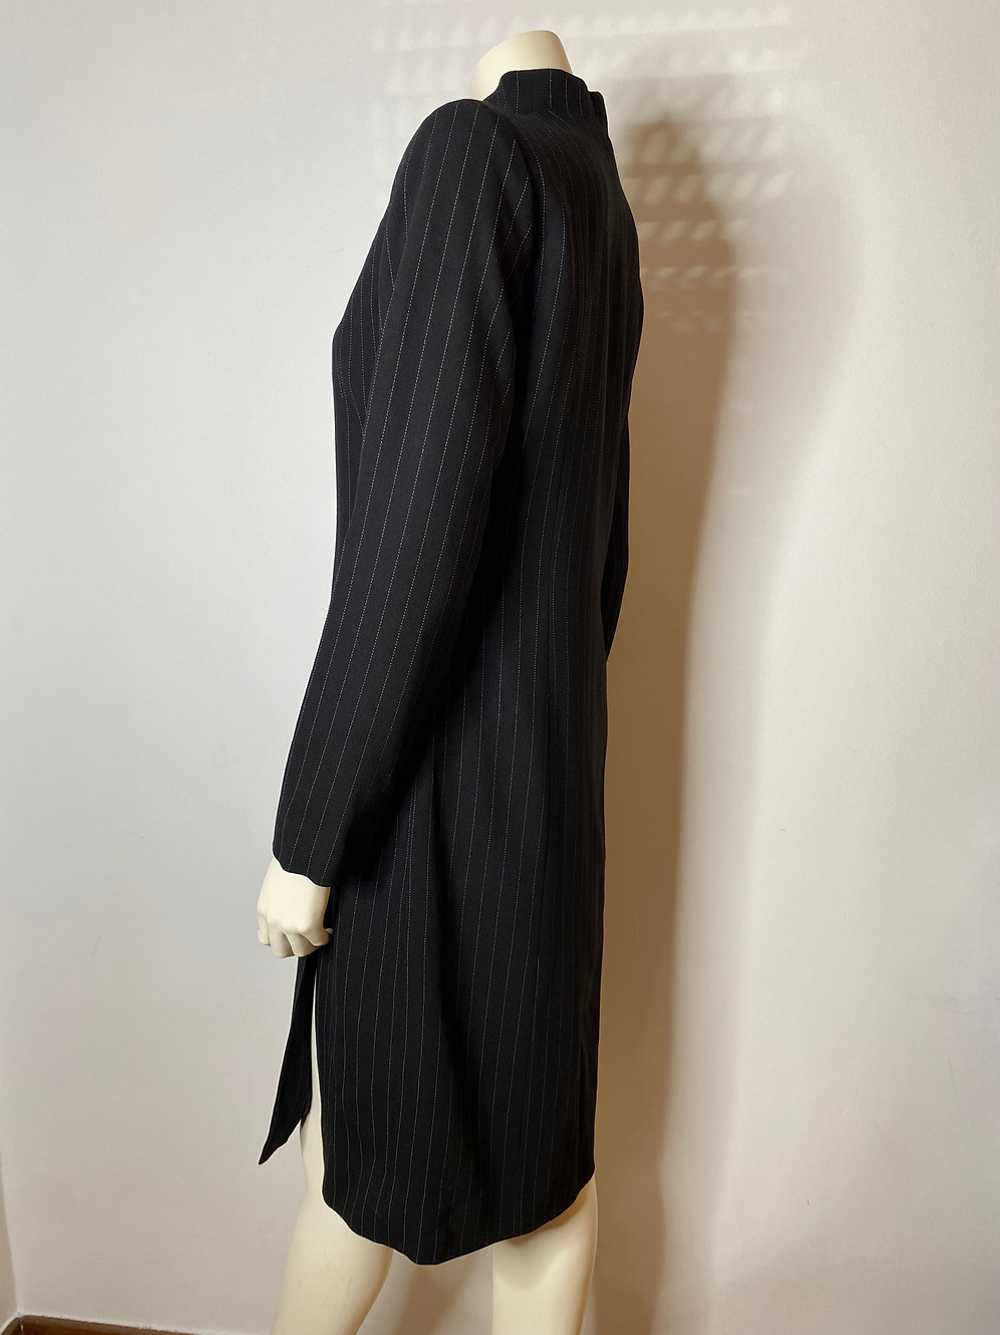 Yves Saint Laurent black striped dress - image 3